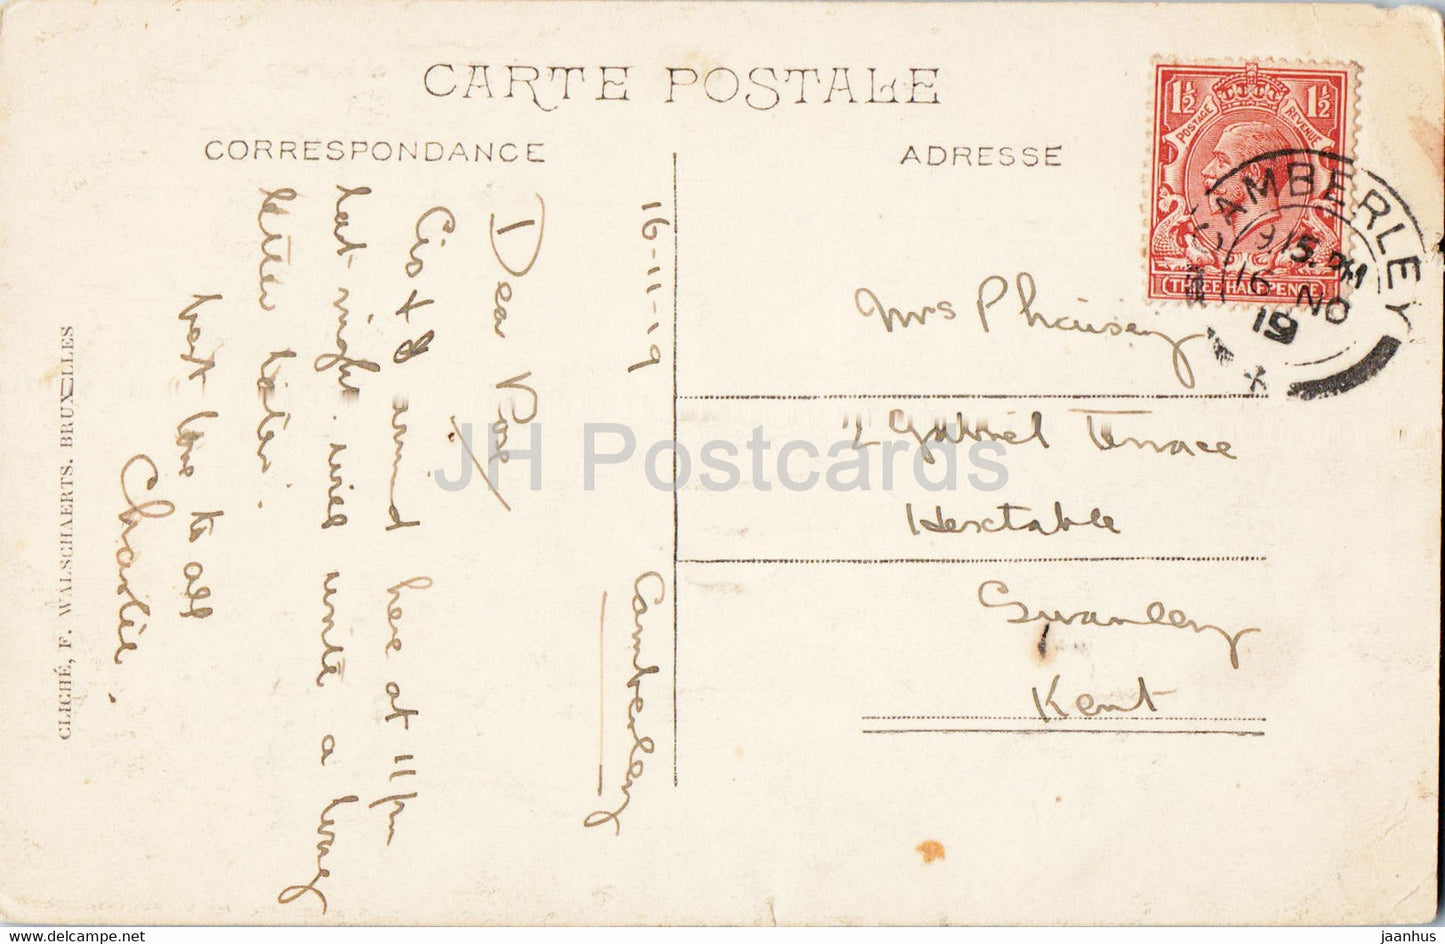 Ostende - Oostende - Le Kursaal et la Plage - Strand - 84 - alte Postkarte - 1919 - Belgien - gebraucht